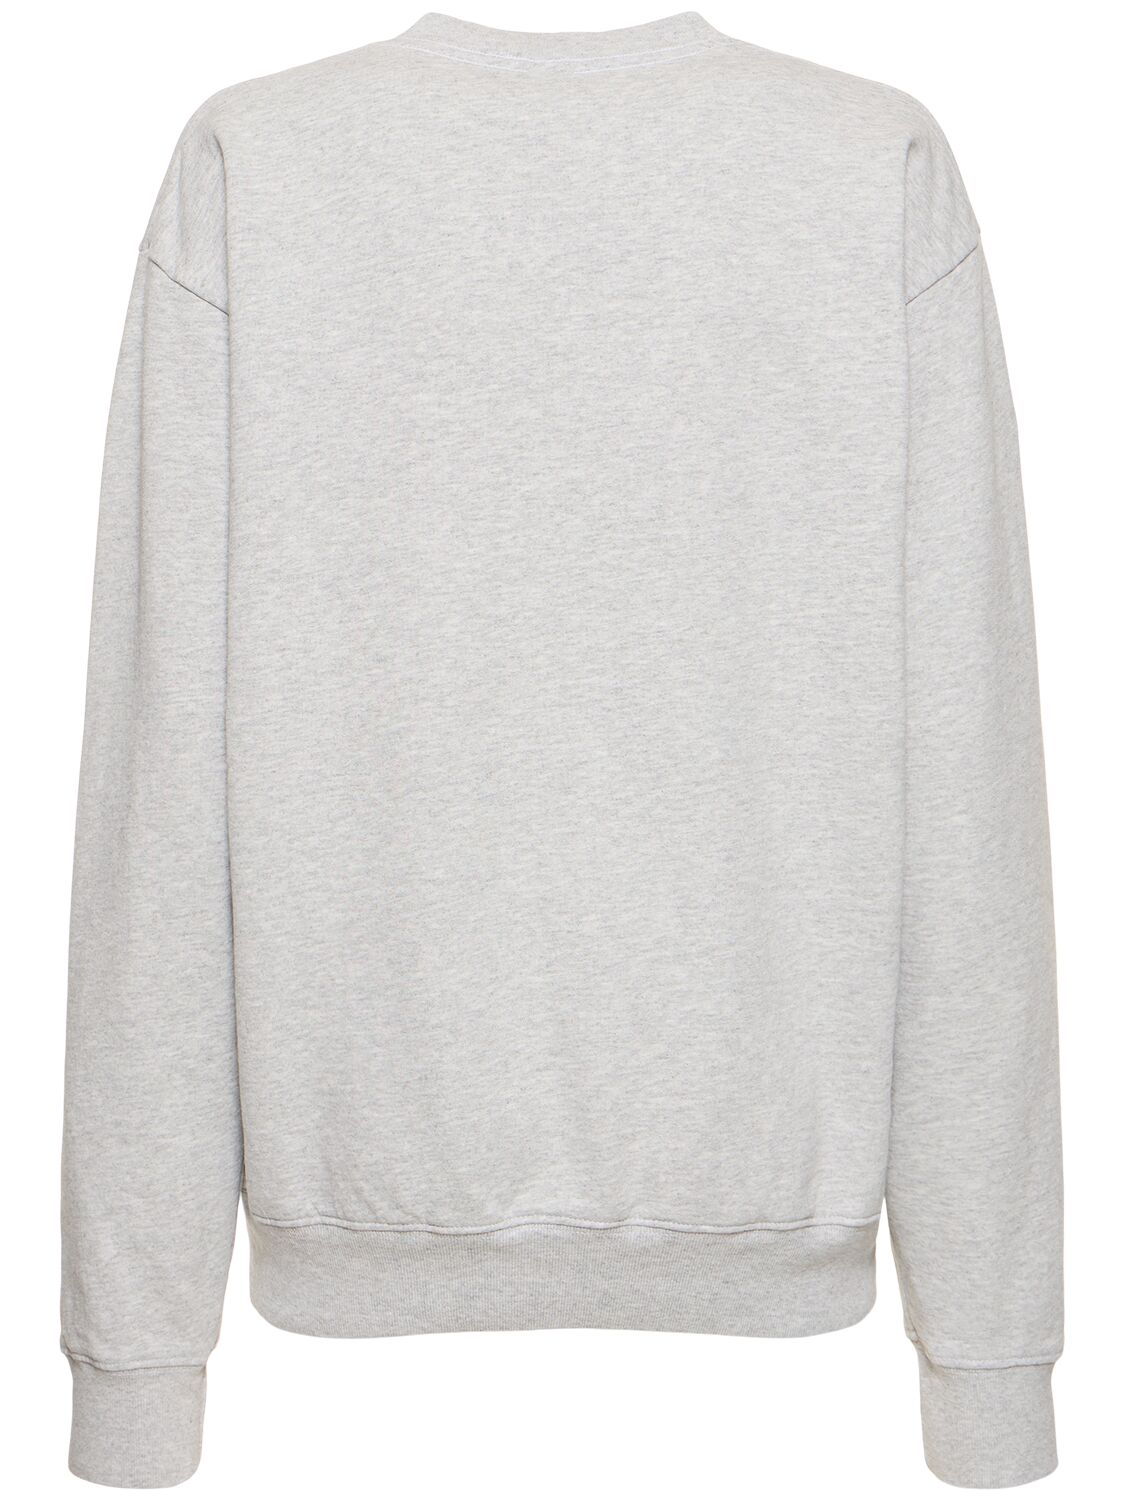 Shop Sporty And Rich Athletic Club Unisex Cotton Sweatshirt In Grey